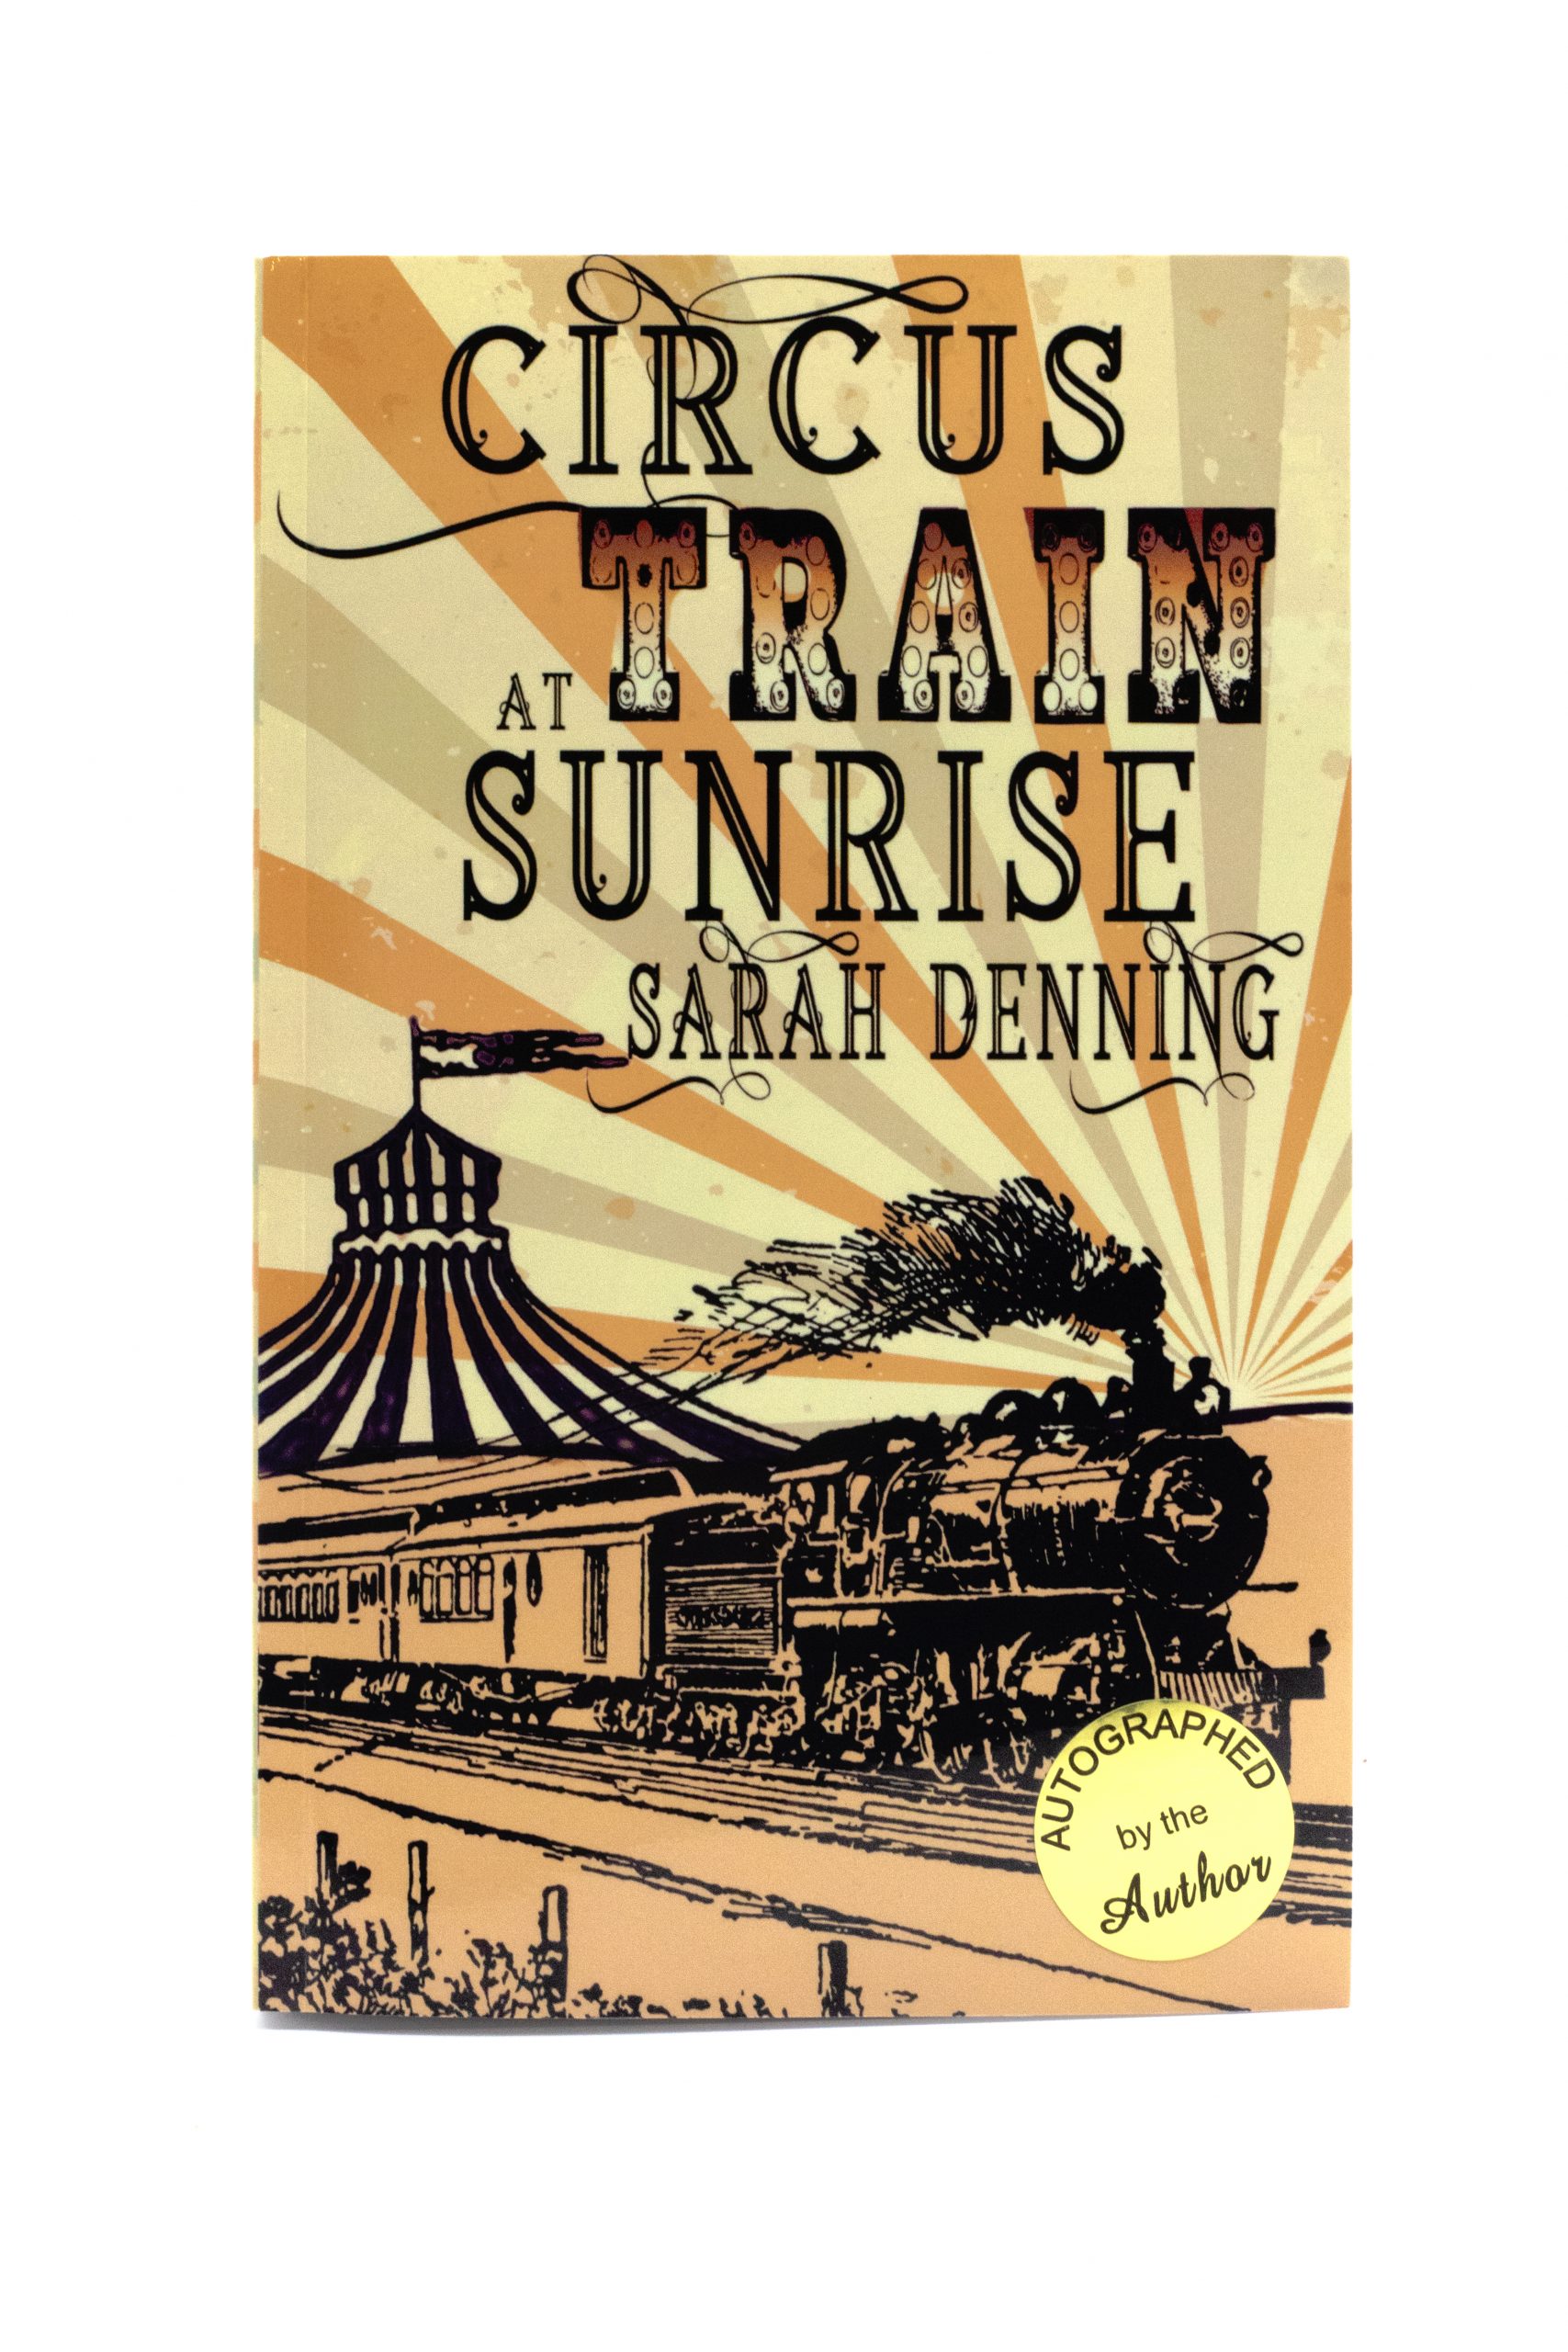 Circus Train at Sunrise